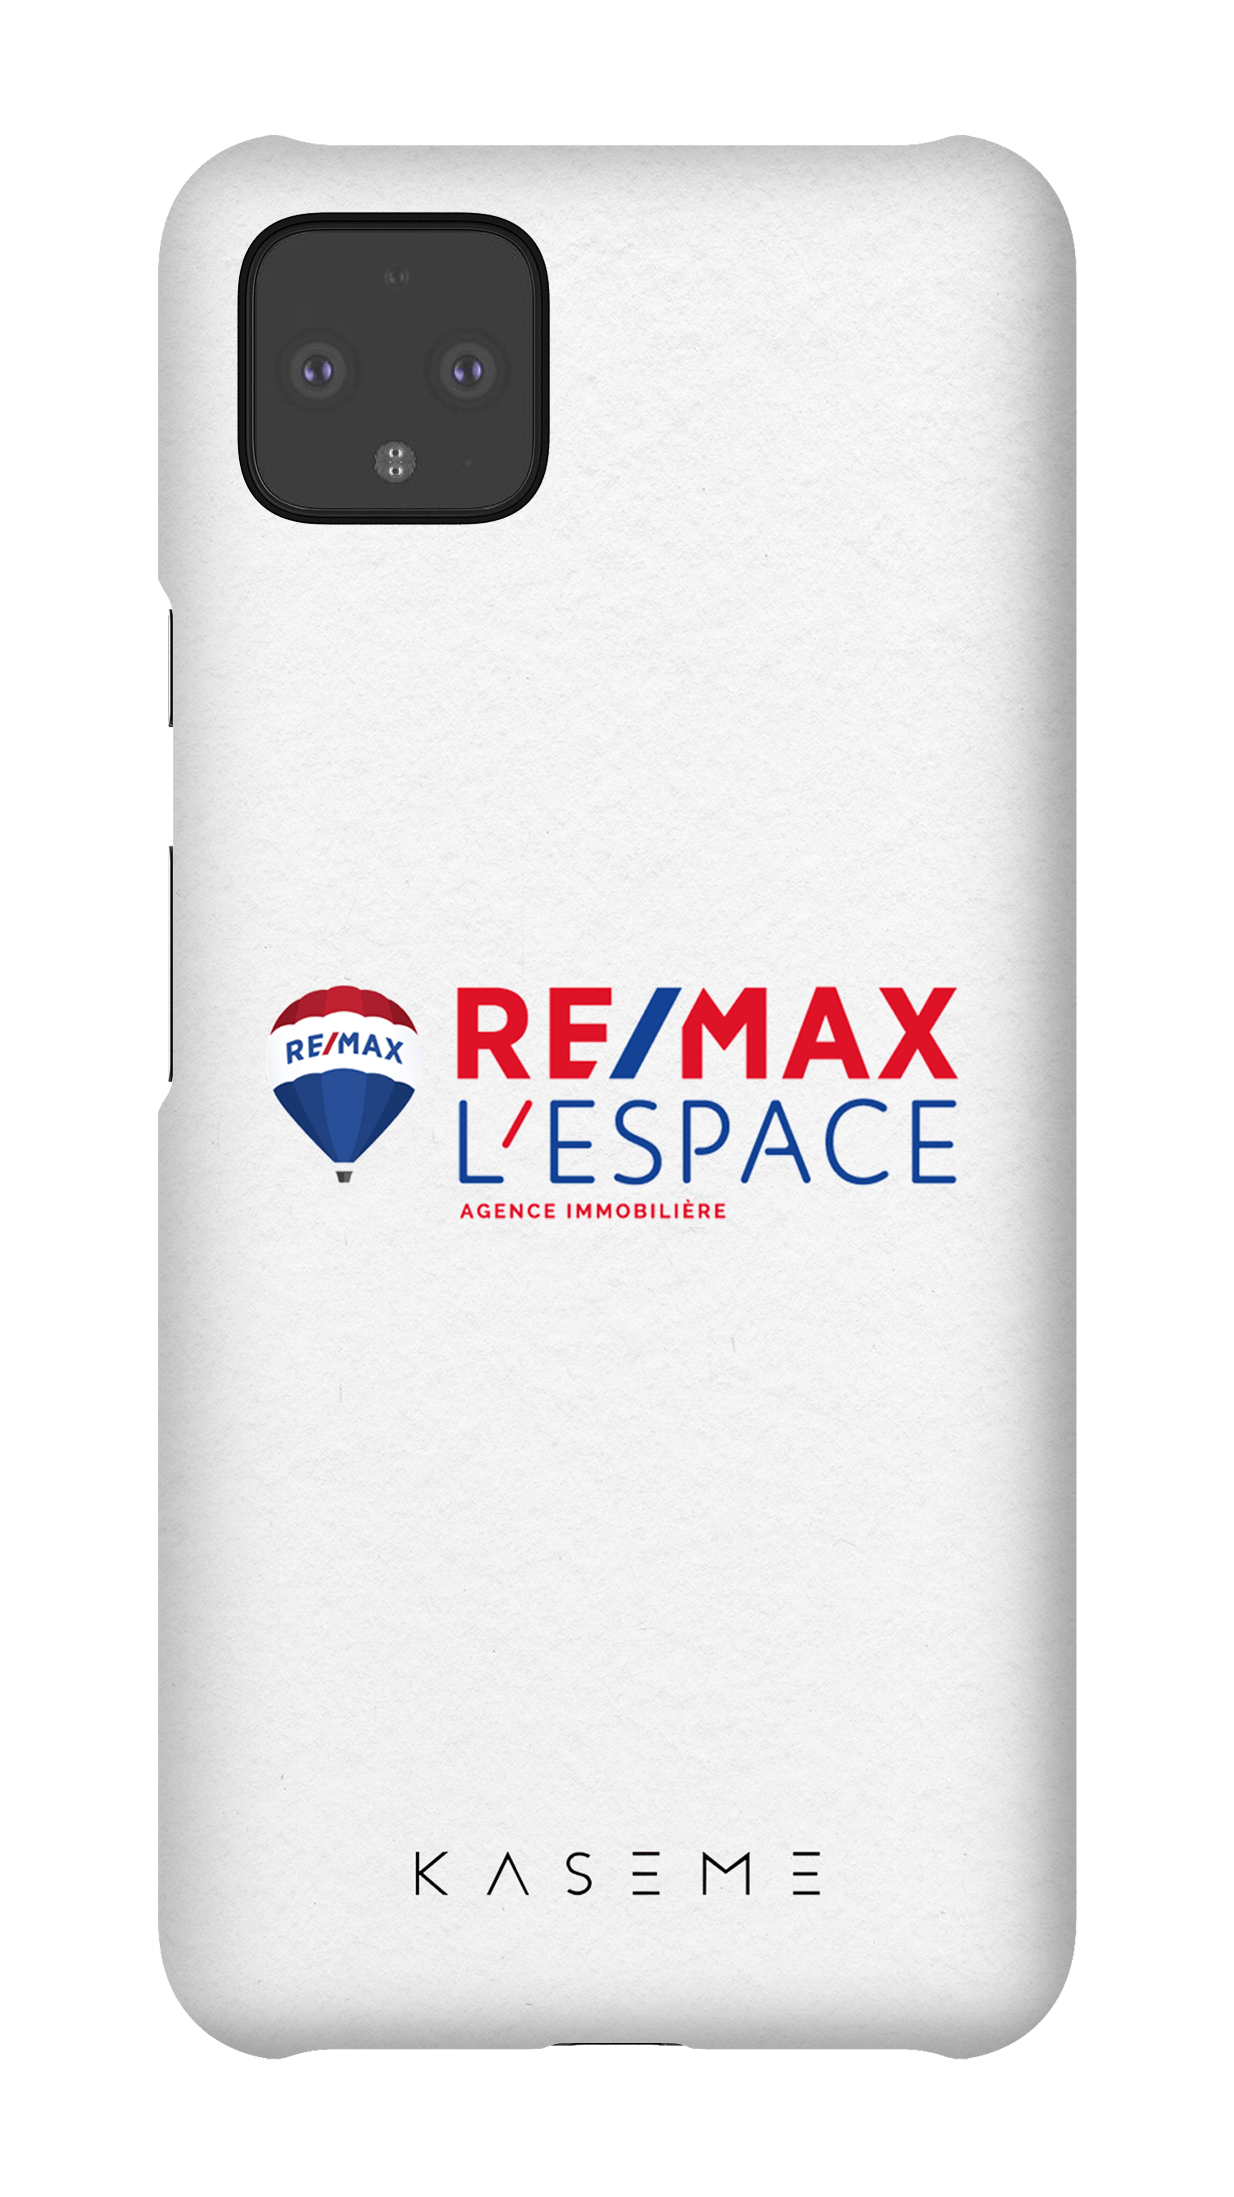 Remax L'Espace Blanc - Google Pixel 4 XL